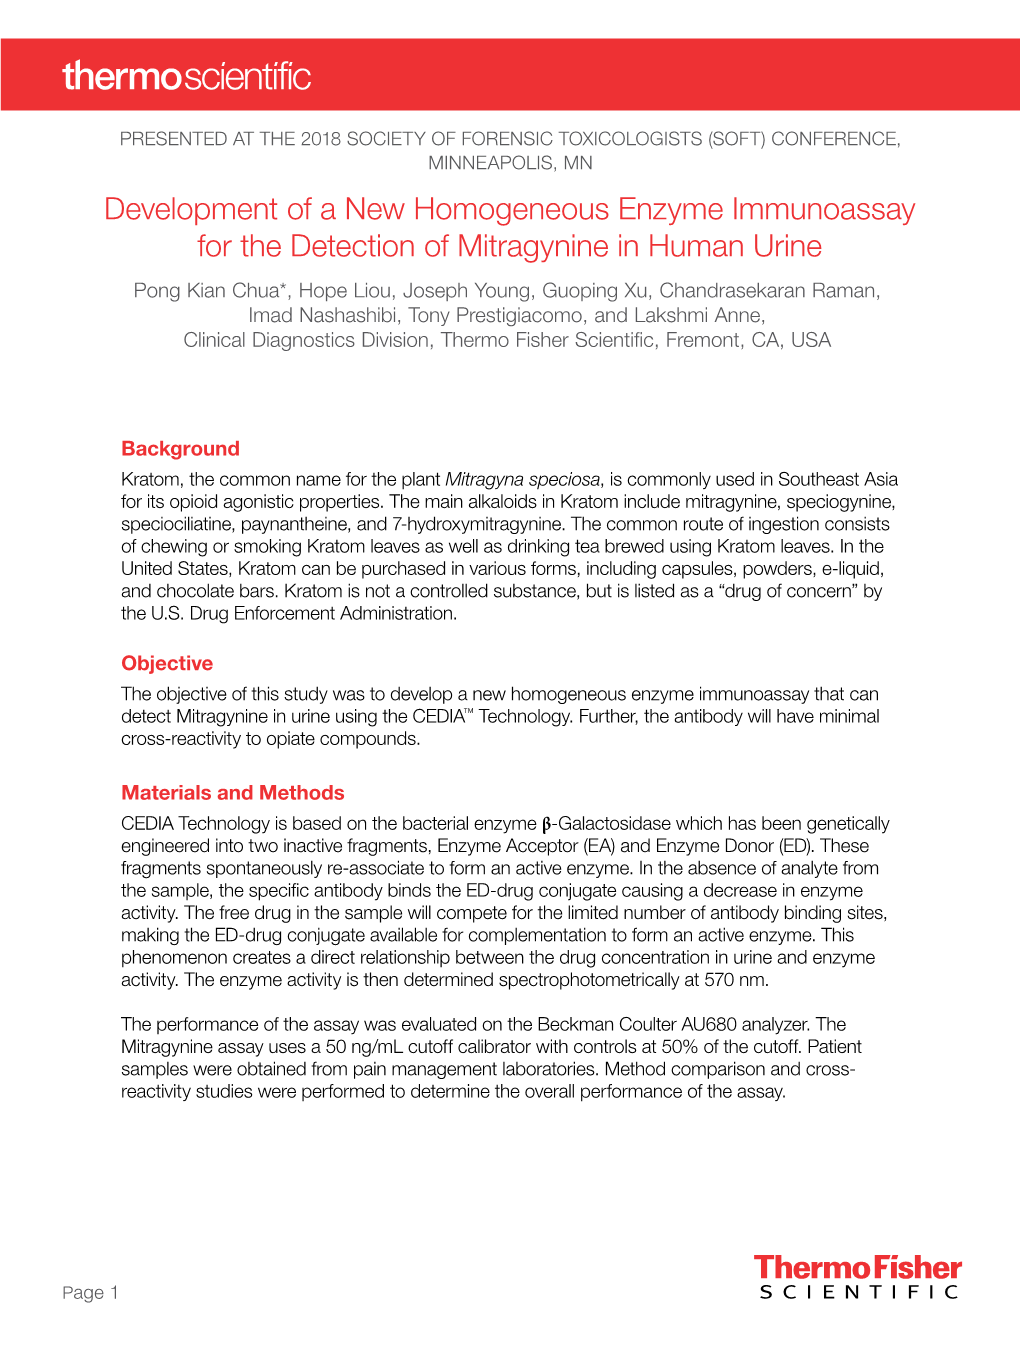 Development of a New Homogeneous Enzyme Immunoassay for The